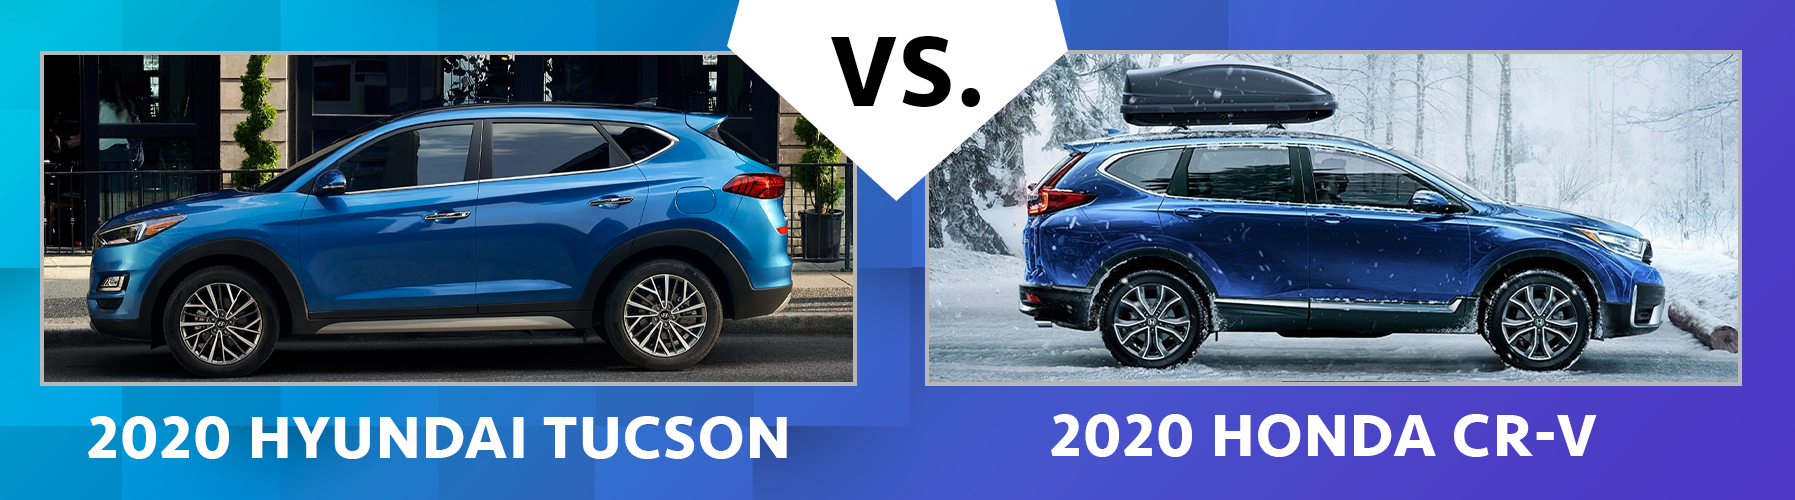 2020 Hyundai Tucson vs. 2020 Honda CRV Which Is Better?